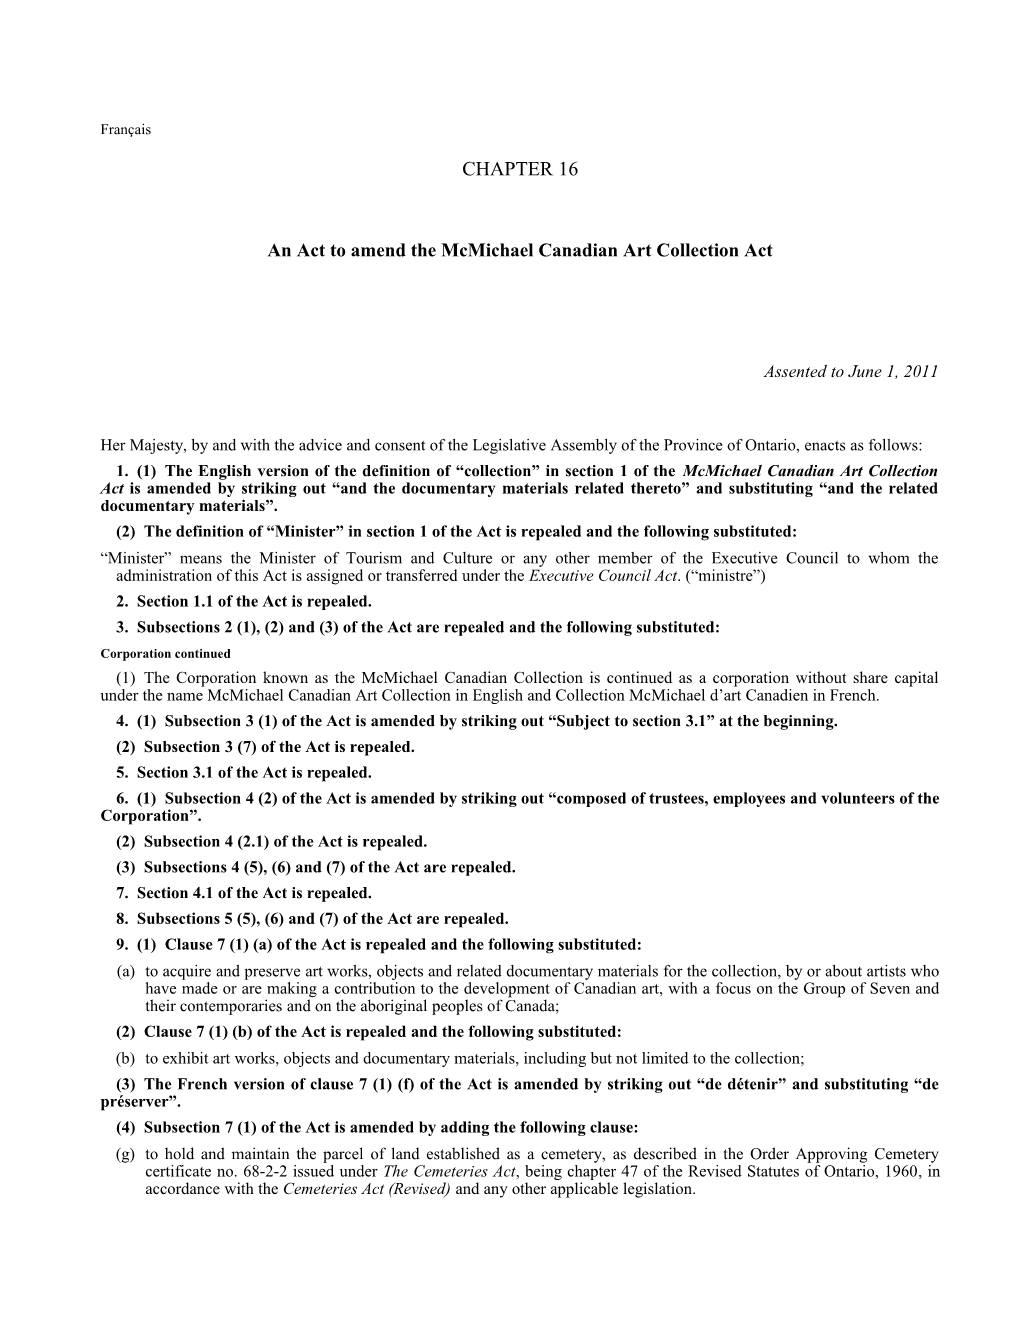 Mcmichael Canadian Art Collection Amendment Act, 2011, S.O. 2011, C. 16 - Bill 188